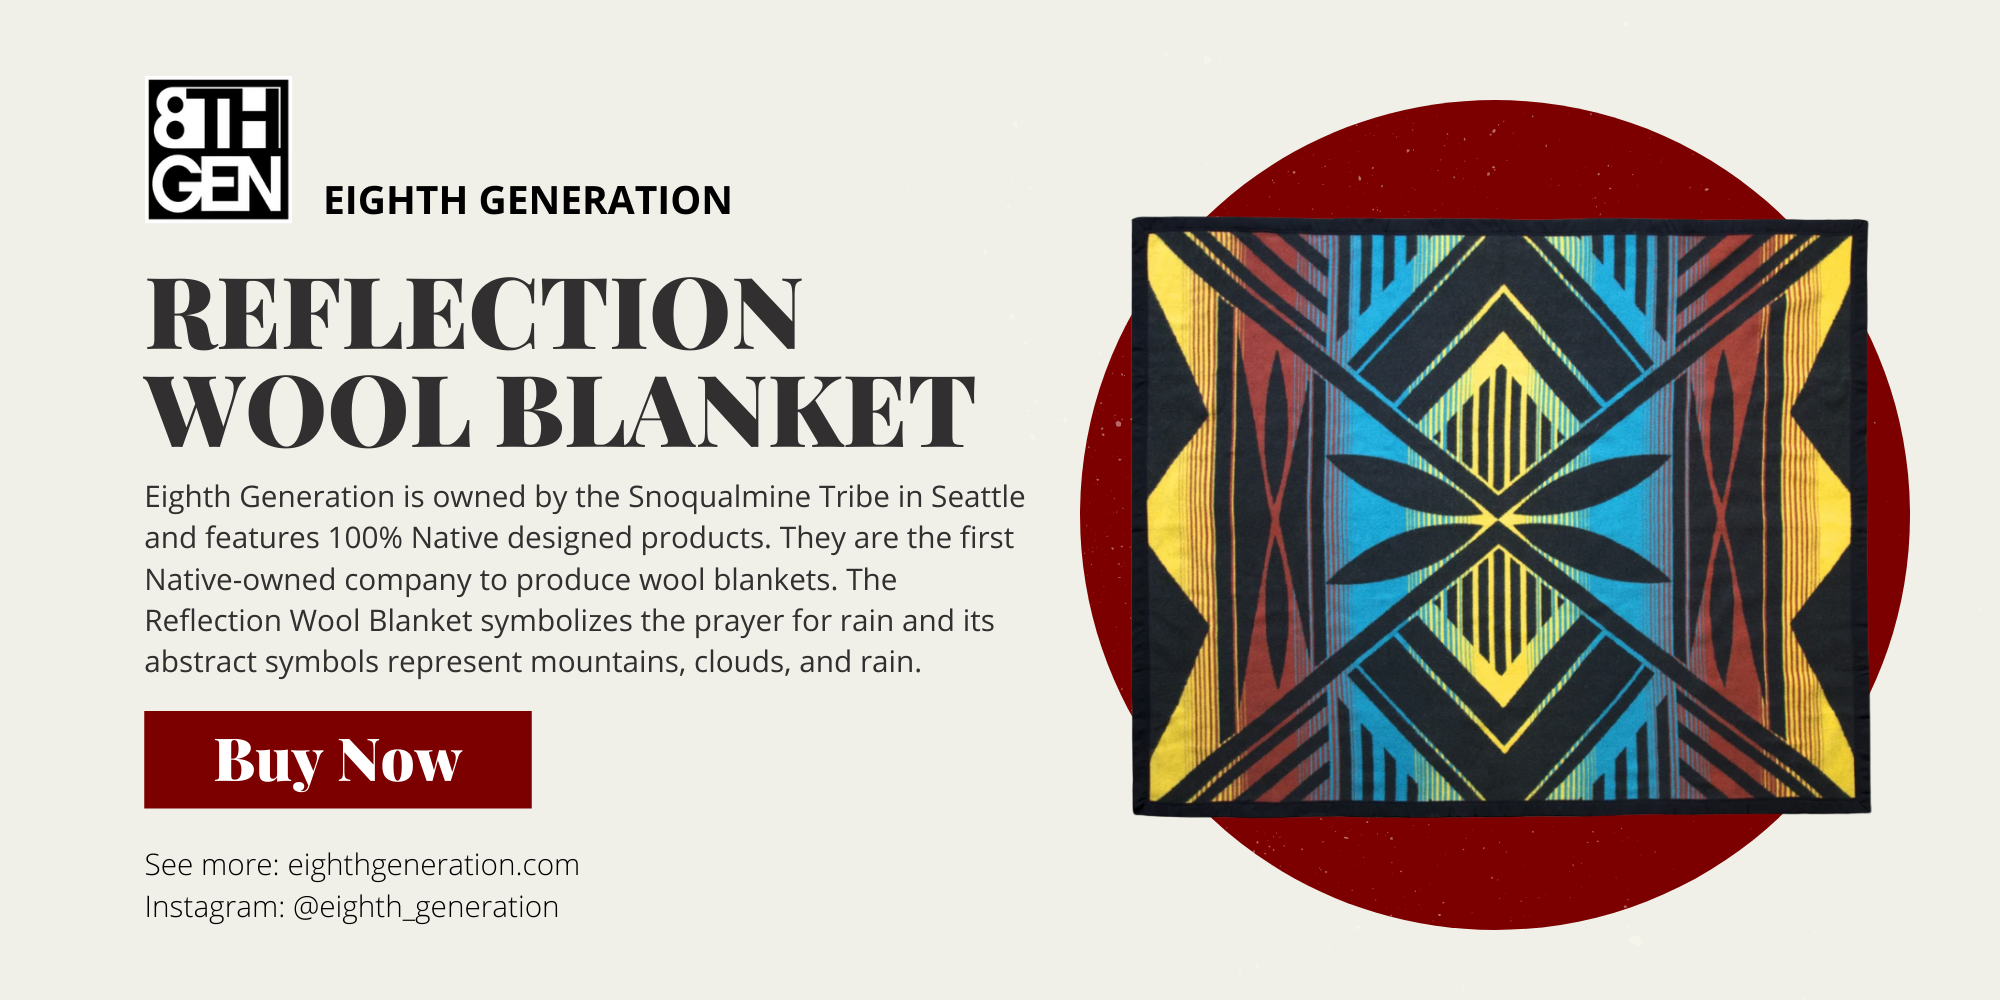 Eighth Generation Reflection Wool Blanket